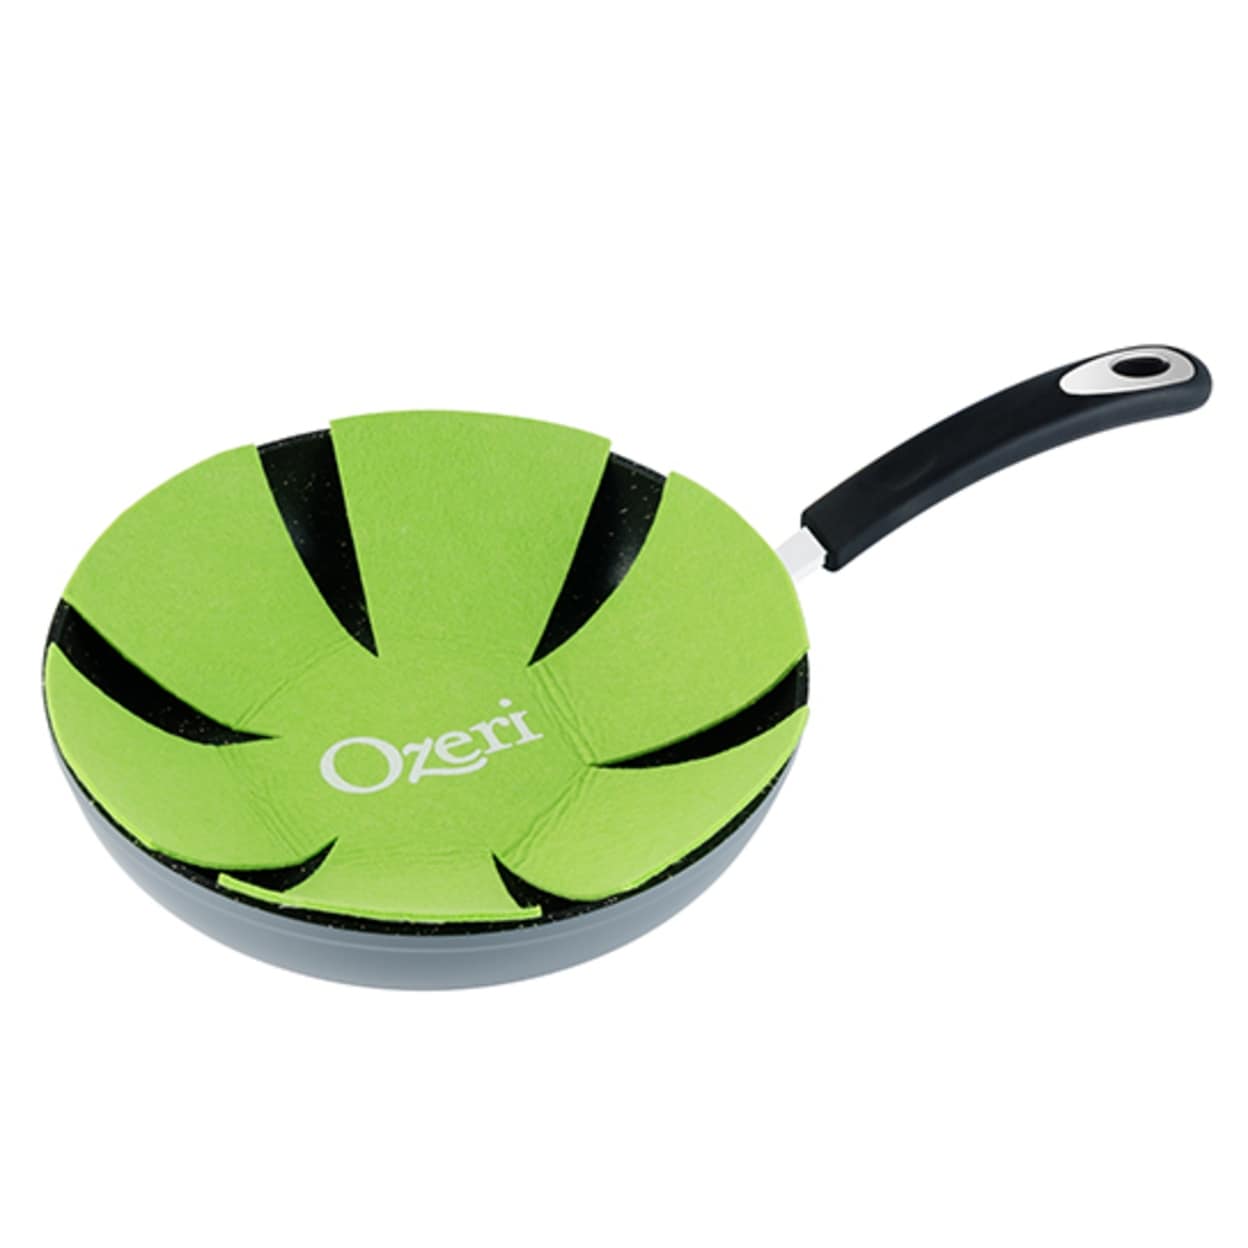 Ozeri Green Earth Frying Pan - 8 inch